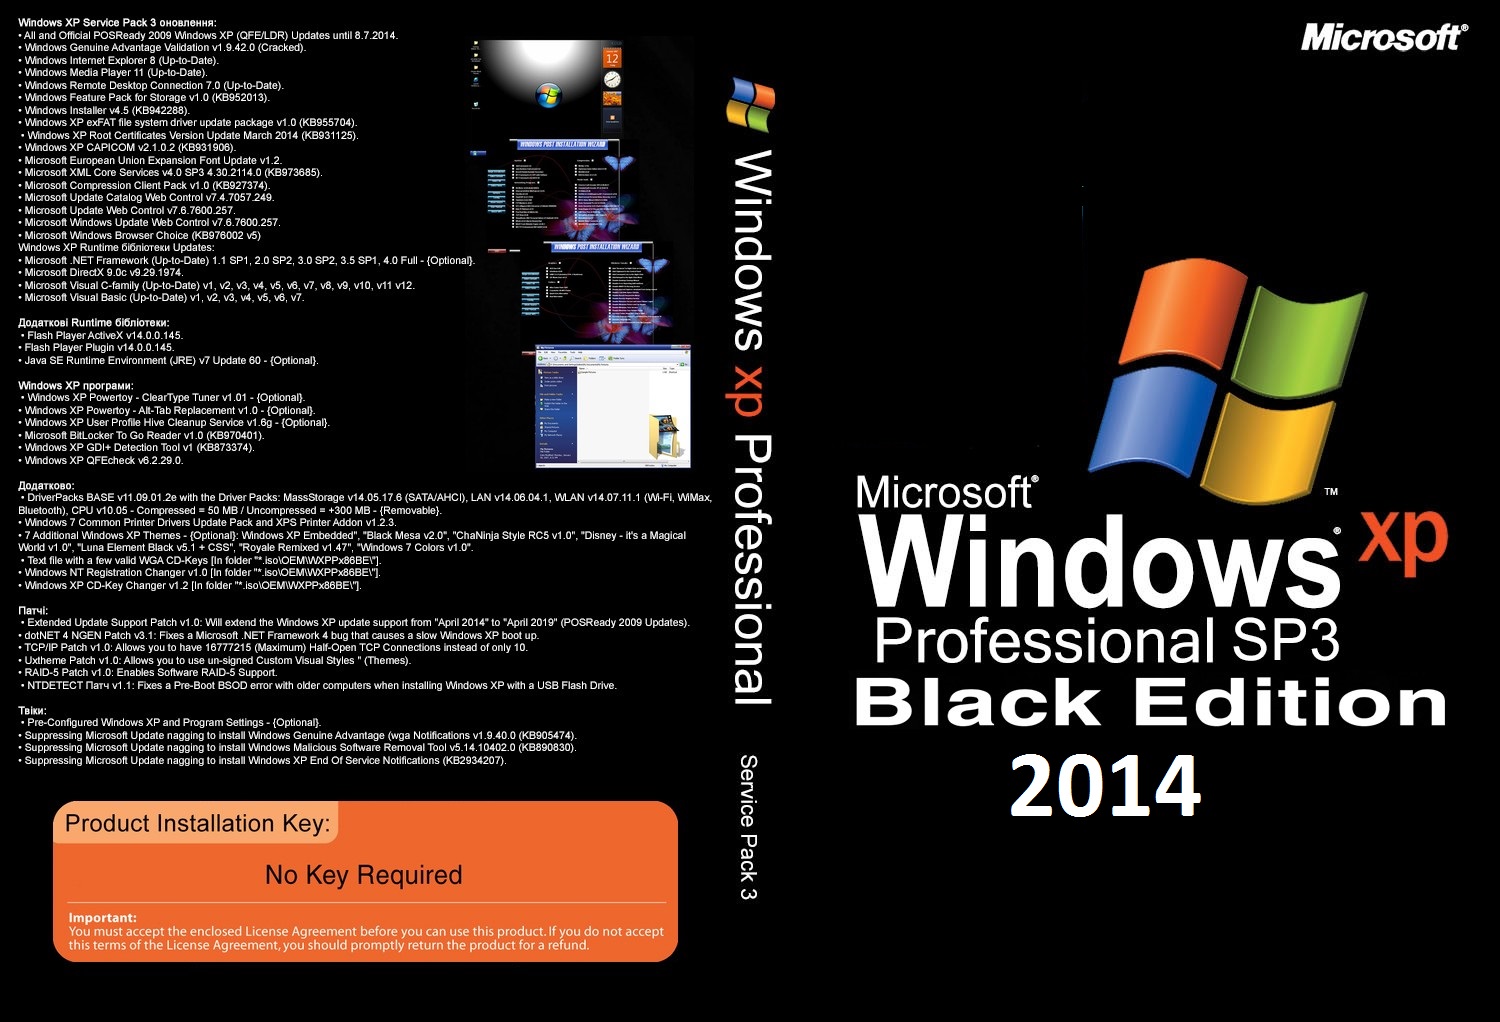 Windows xp sp3 black edition product key